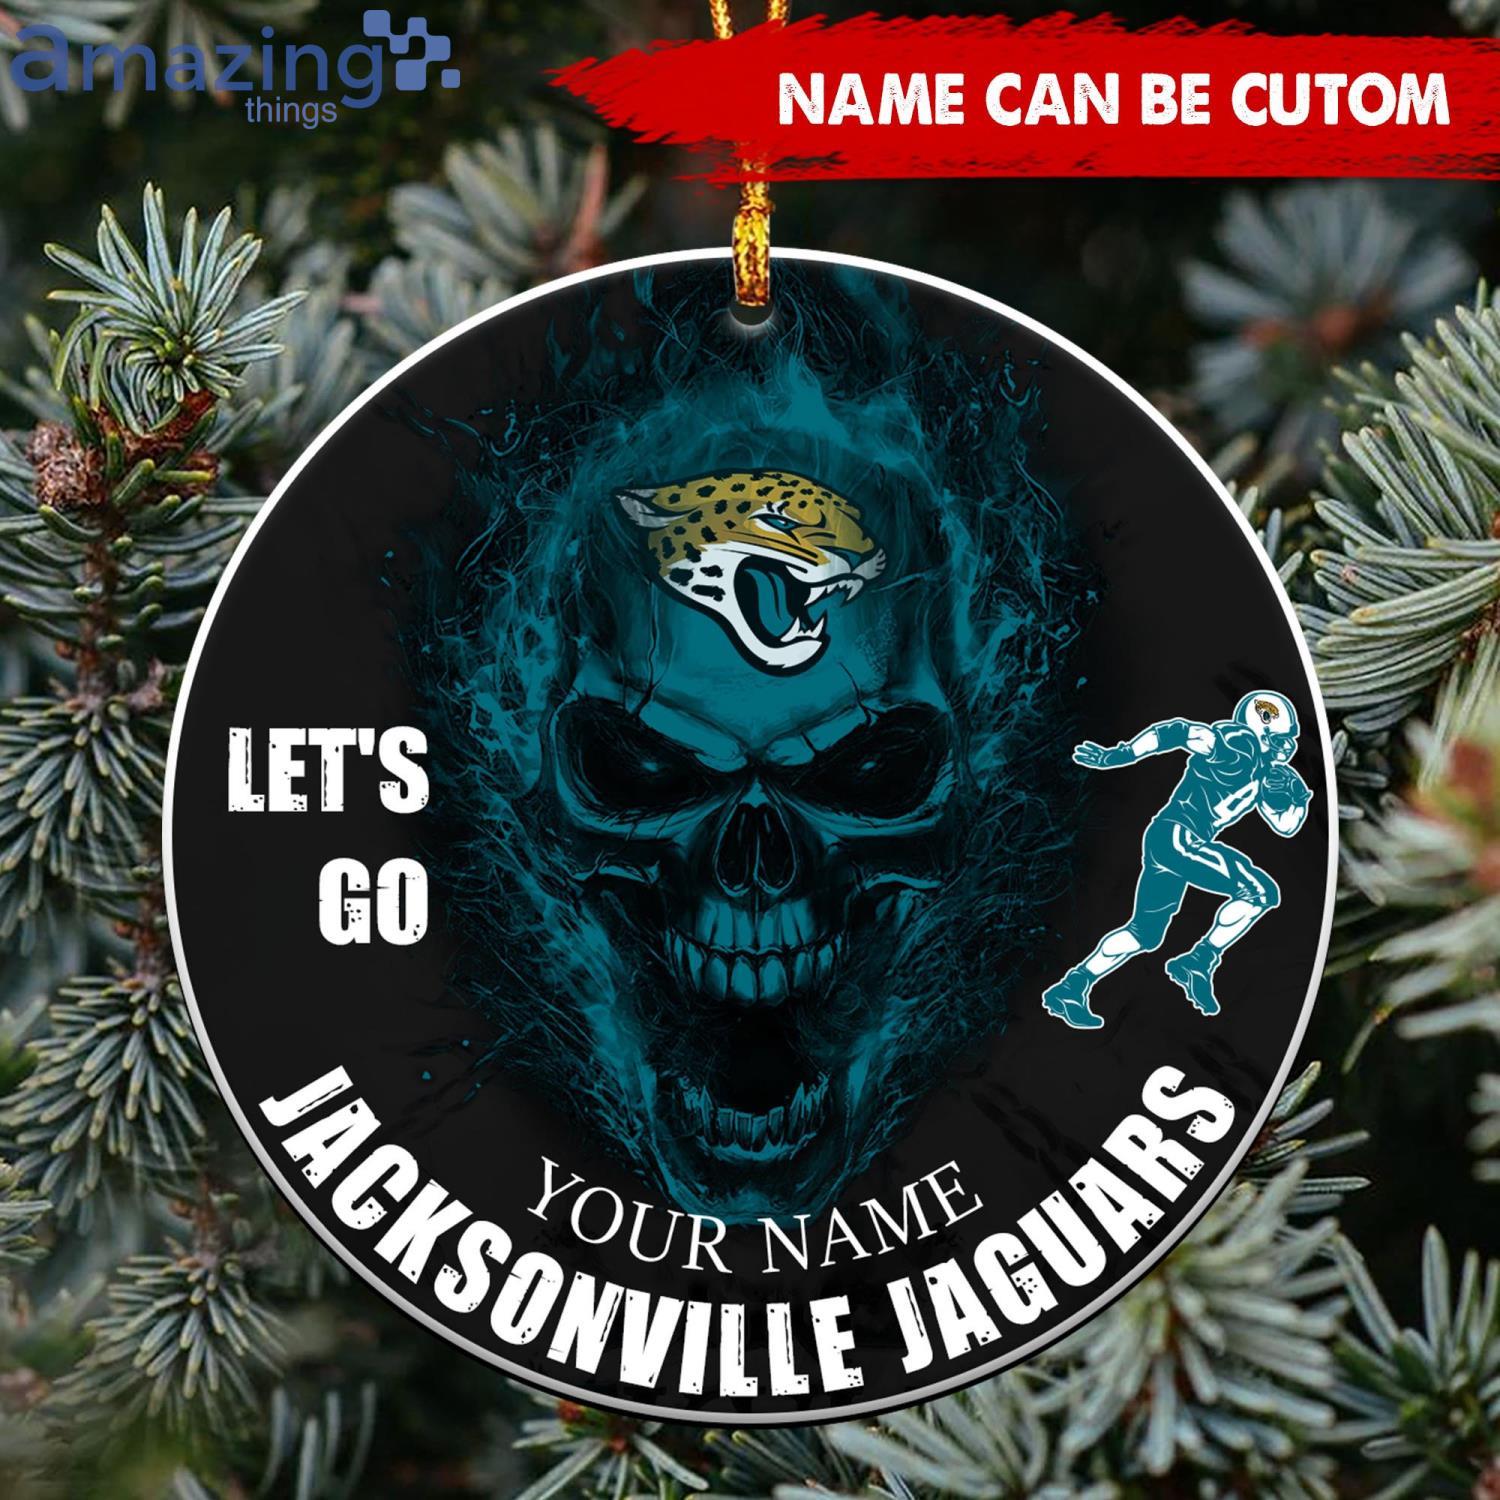 go jacksonville jaguars